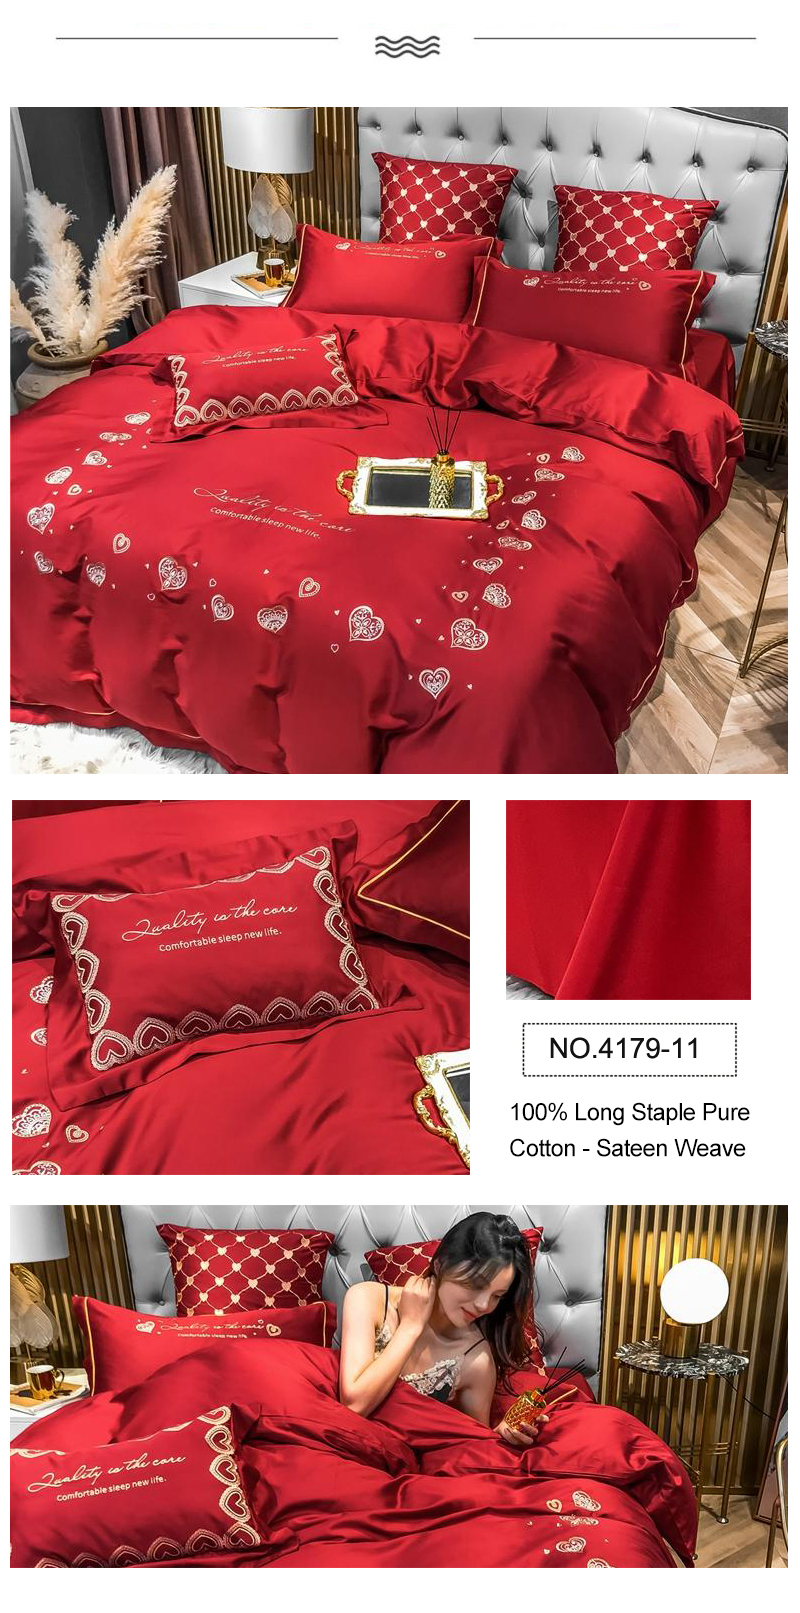 100% Long Staple Cotton Deluxe Bedding Set